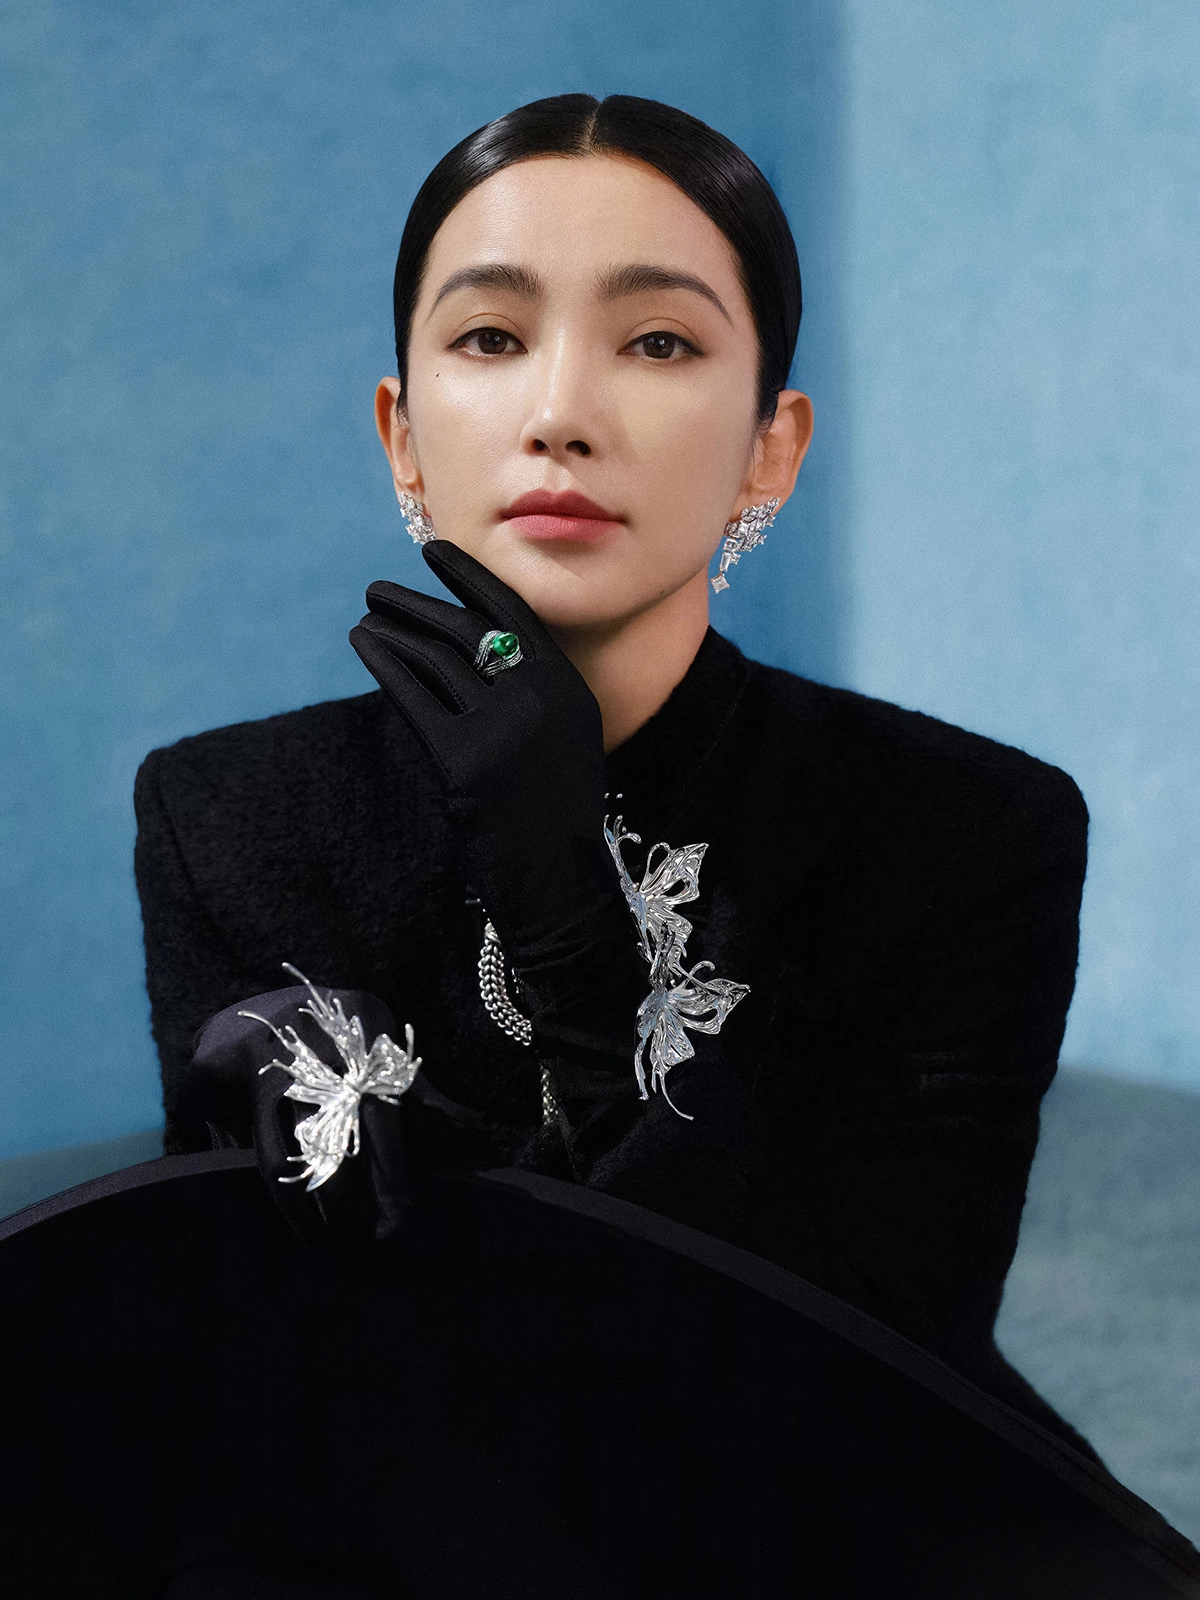 Li Bingbing covers Vogue China November 2022 by Hailun Ma